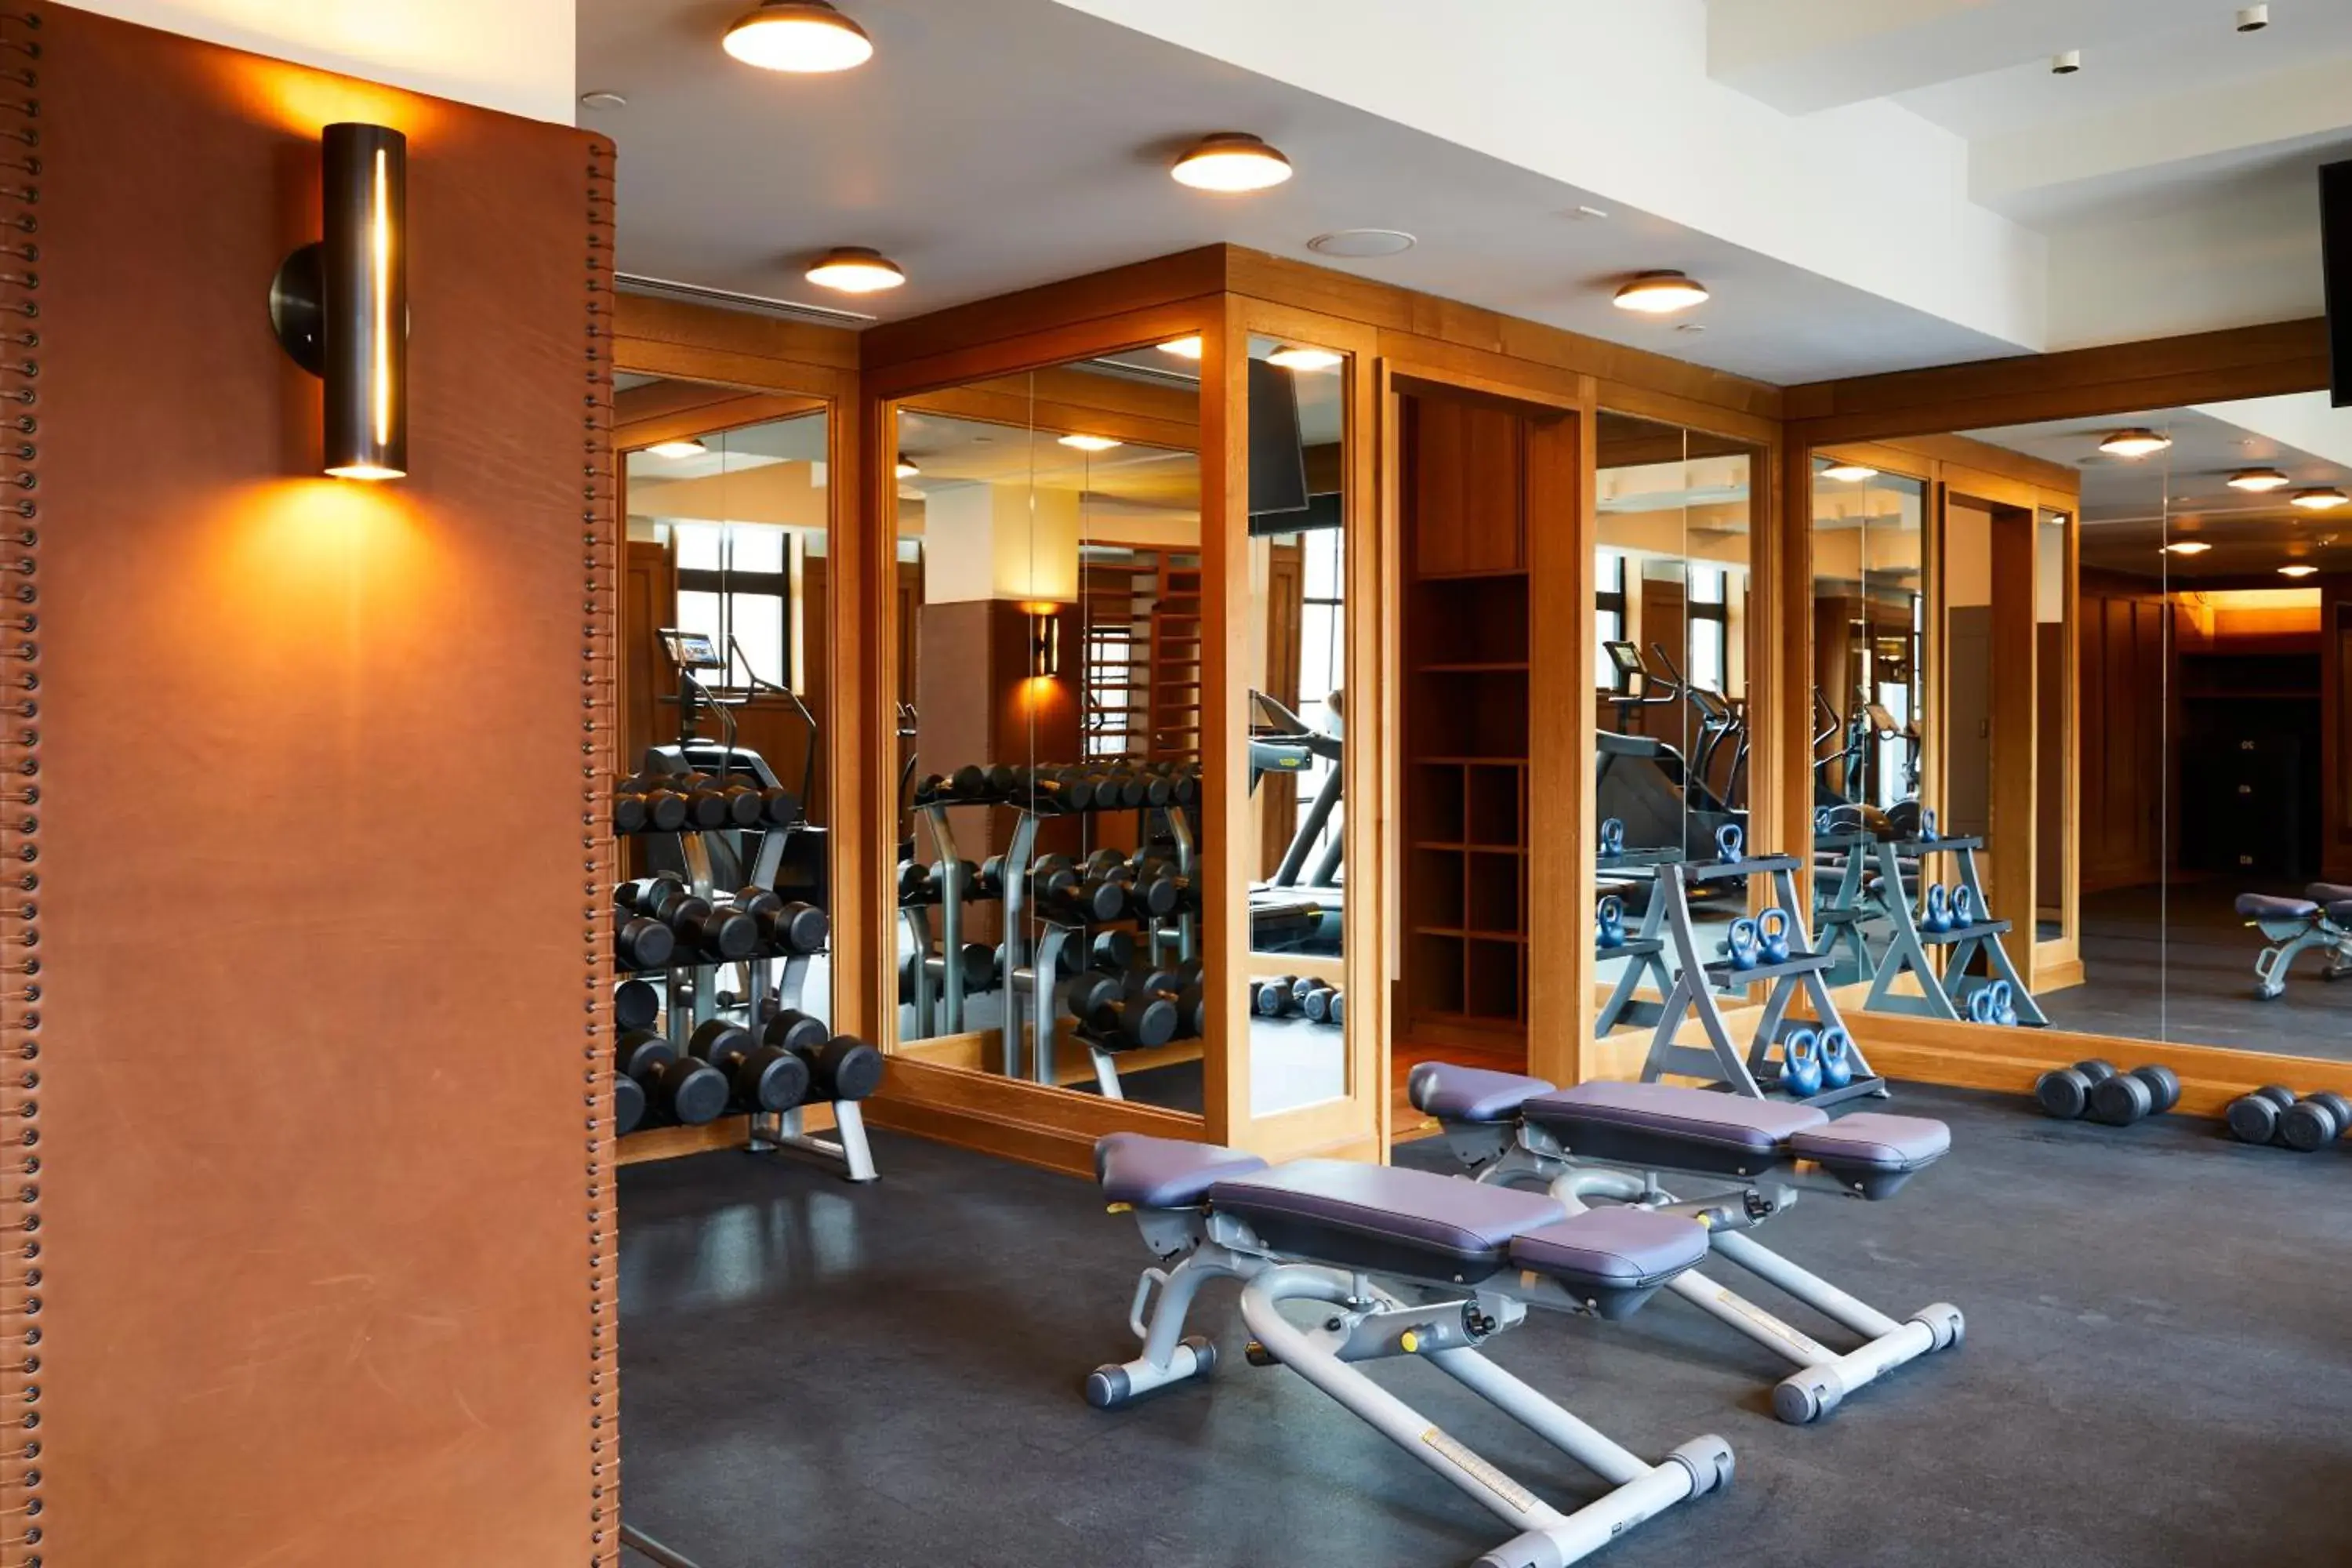 Fitness centre/facilities, Fitness Center/Facilities in Shinola Hotel